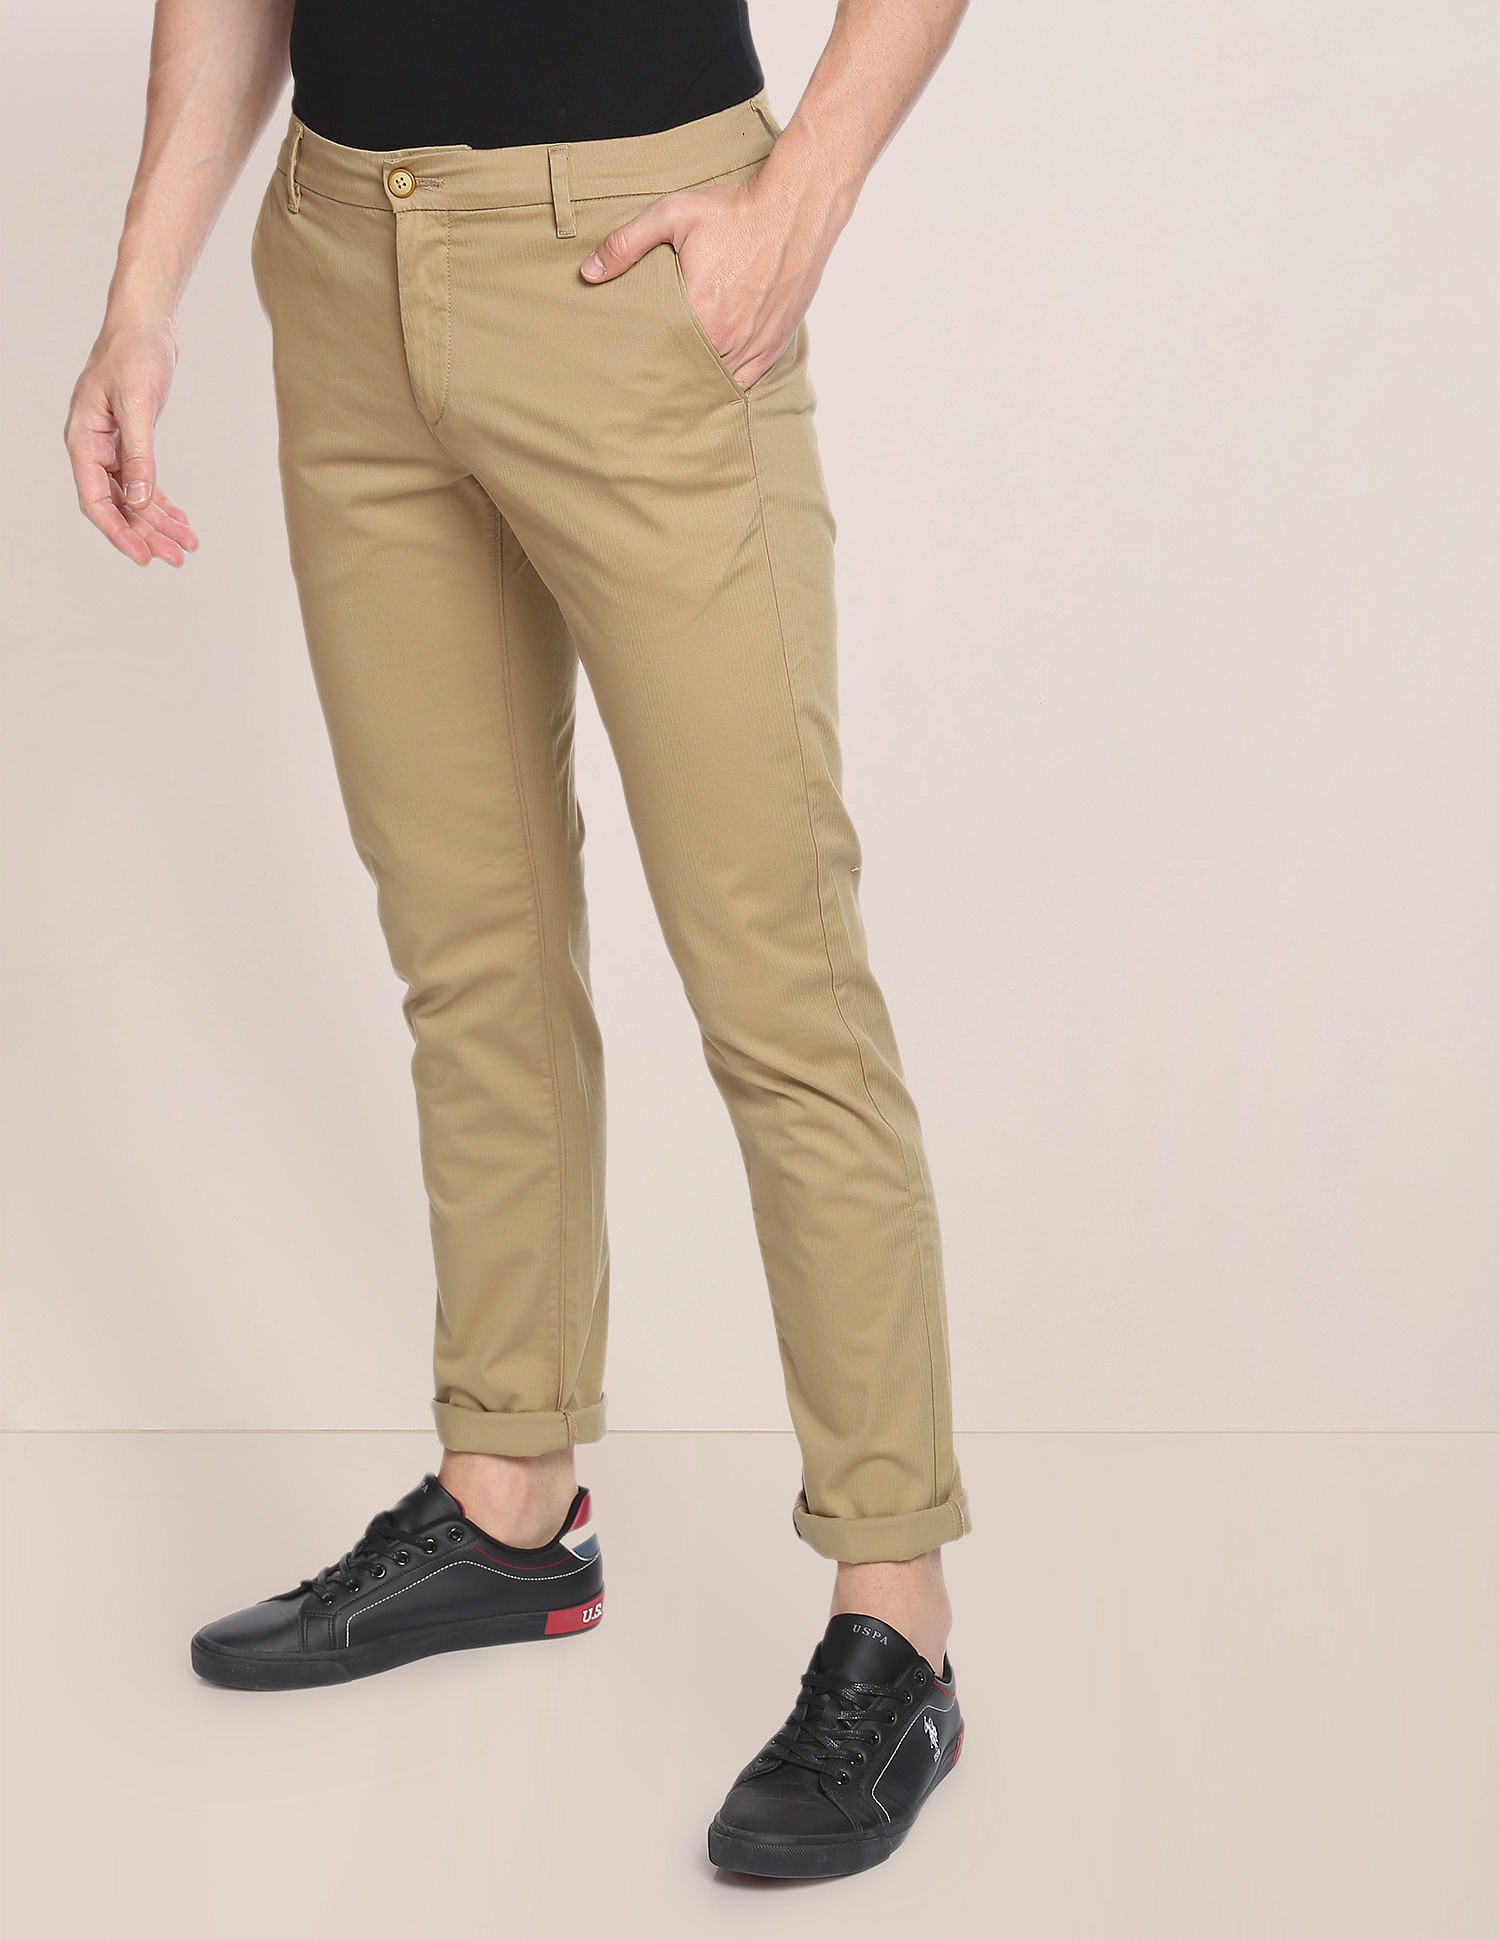 Polo Ralph Lauren 100% Linen Dress Pants Mens 32 x 29 Beige White | eBay